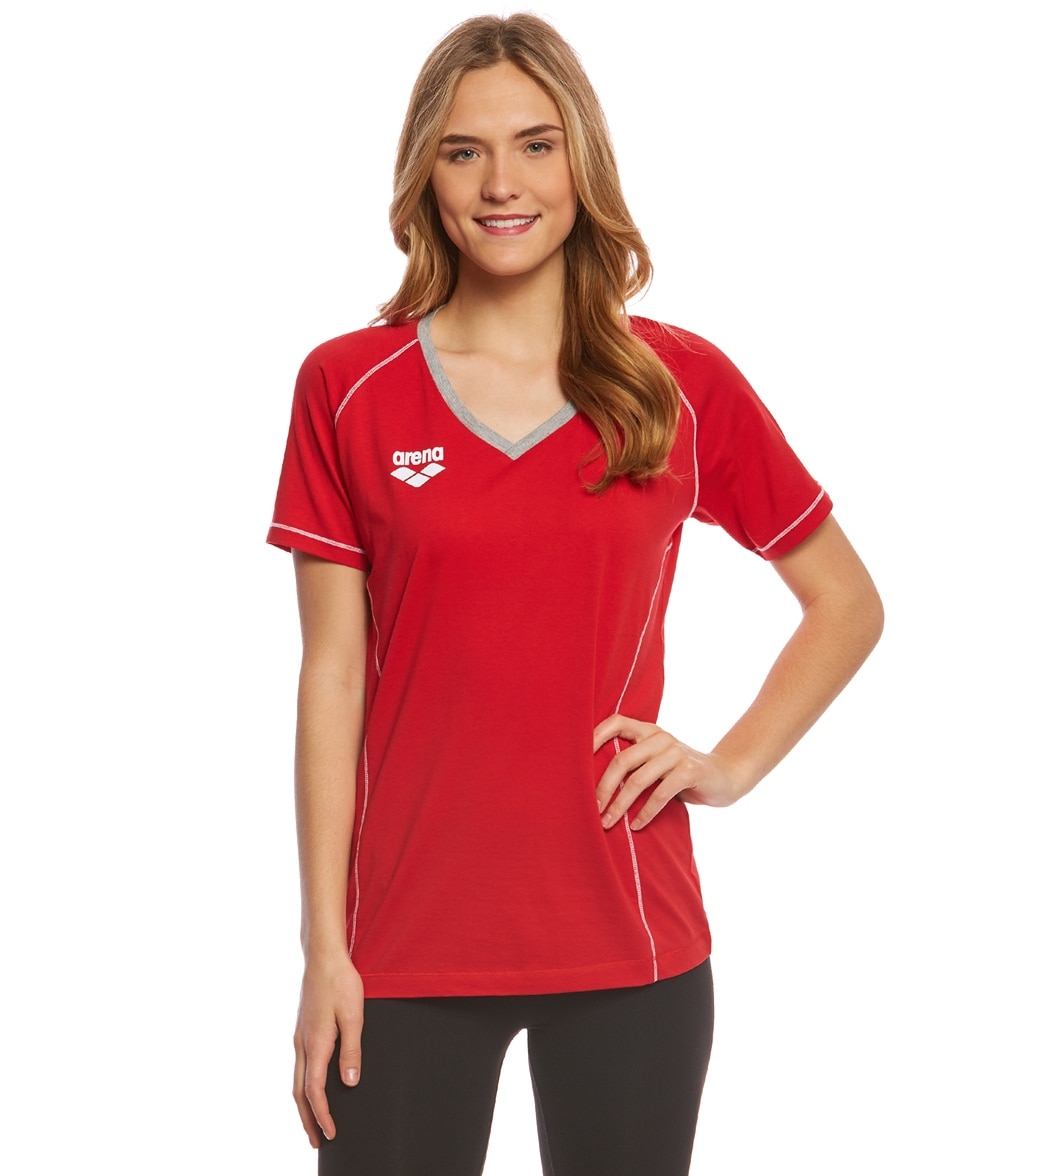 Arena Women's Team Line Short Sleeve V Neck T Shirt - Red Large Cotton - Swimoutlet.com